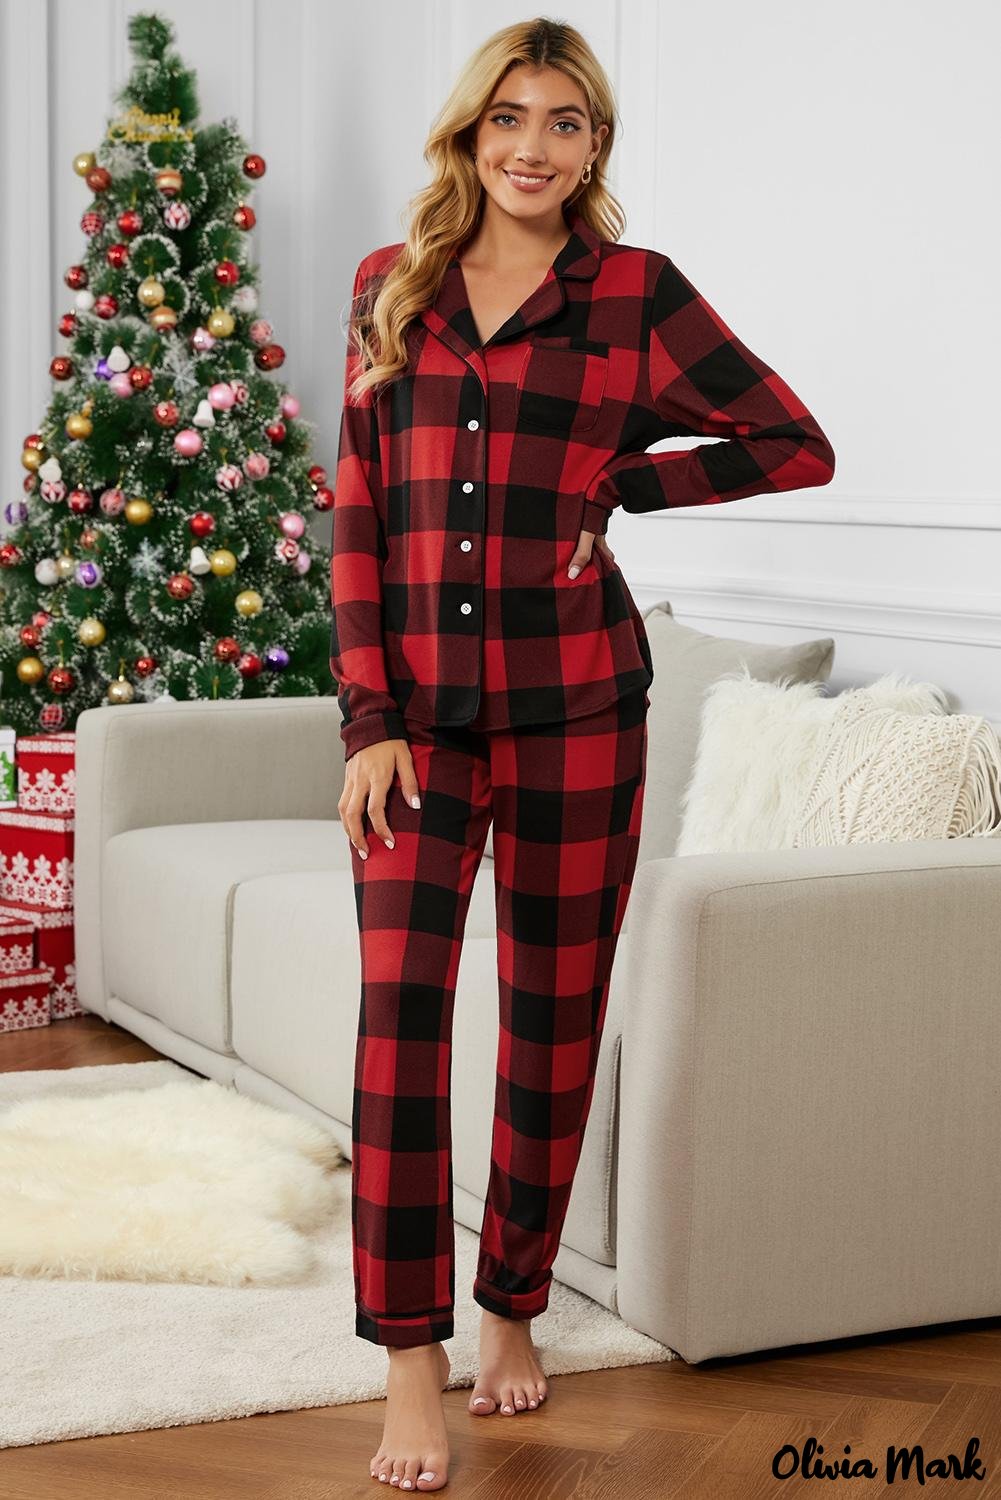 Olivia Mark - Buffalo check flannel pajamas